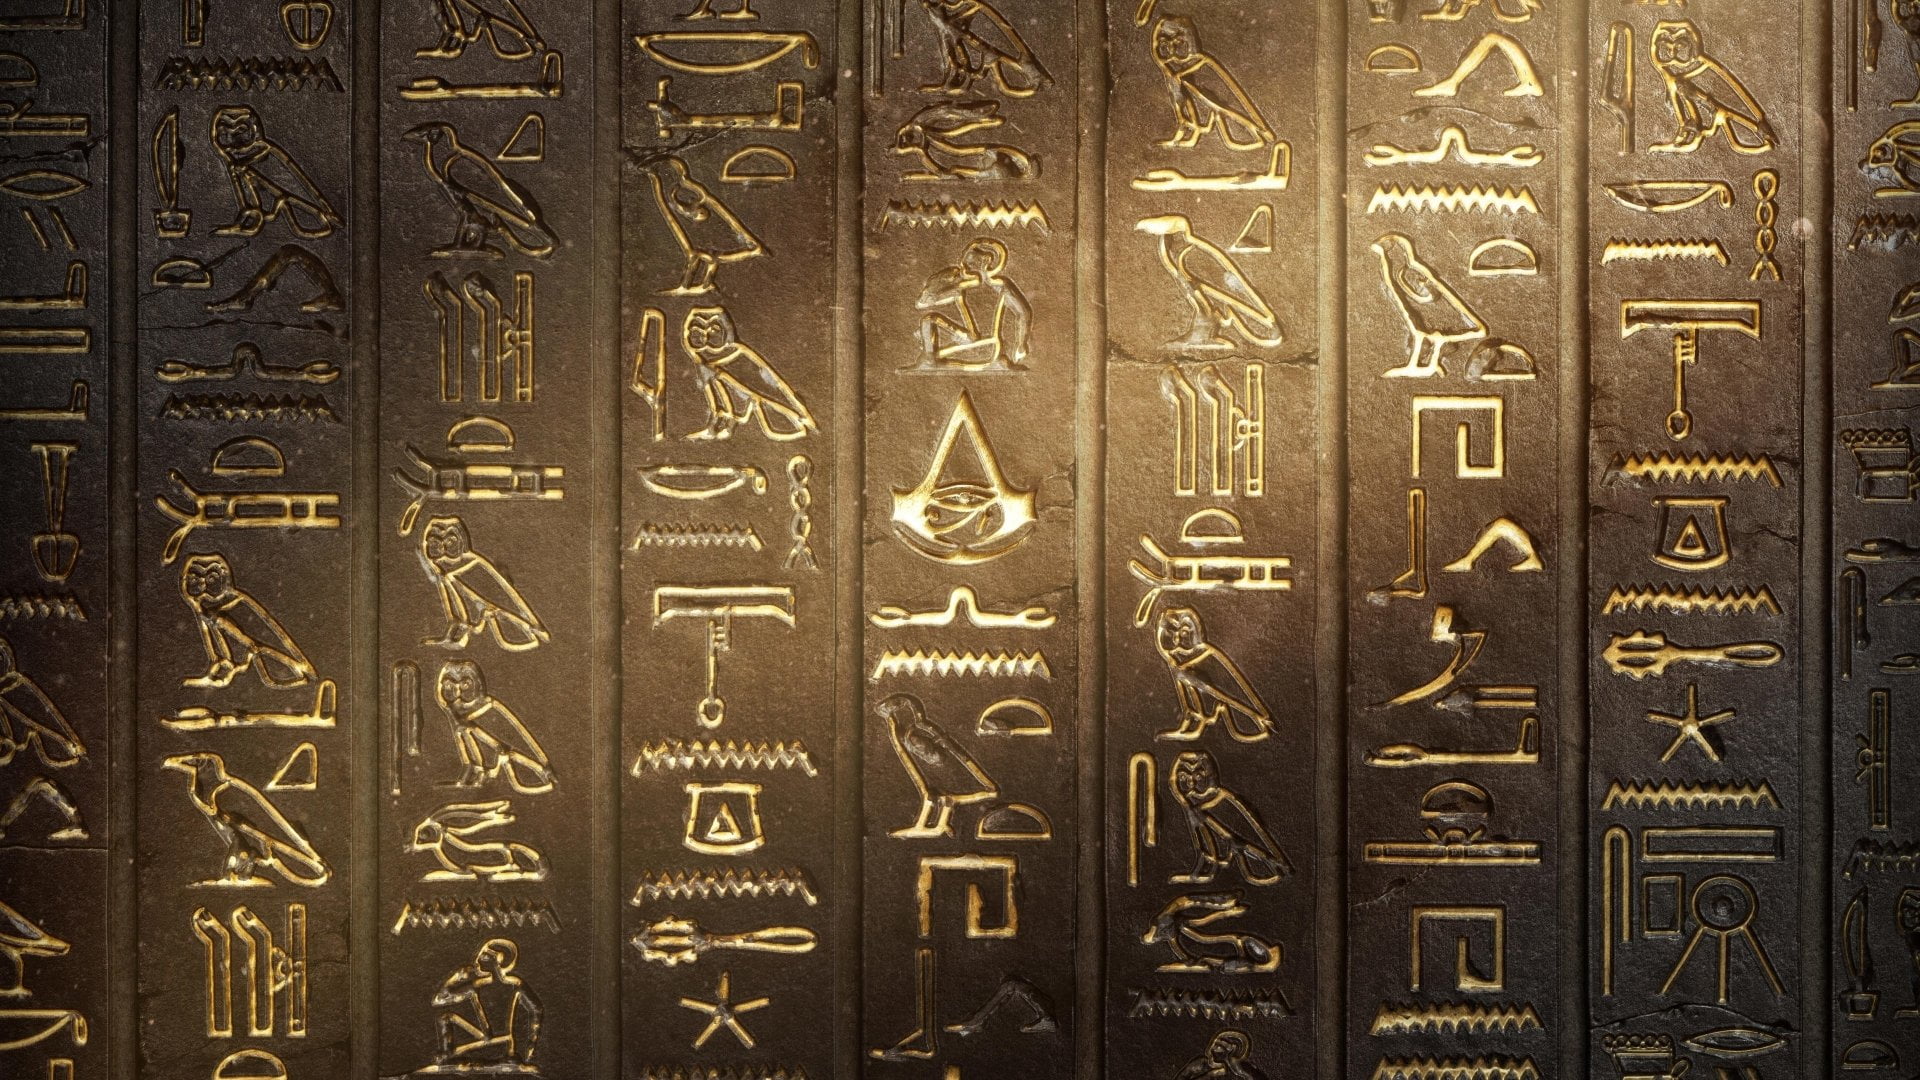 Egyptian hieroglyphs, Assassin's Creed, Assassin's Creed Origins